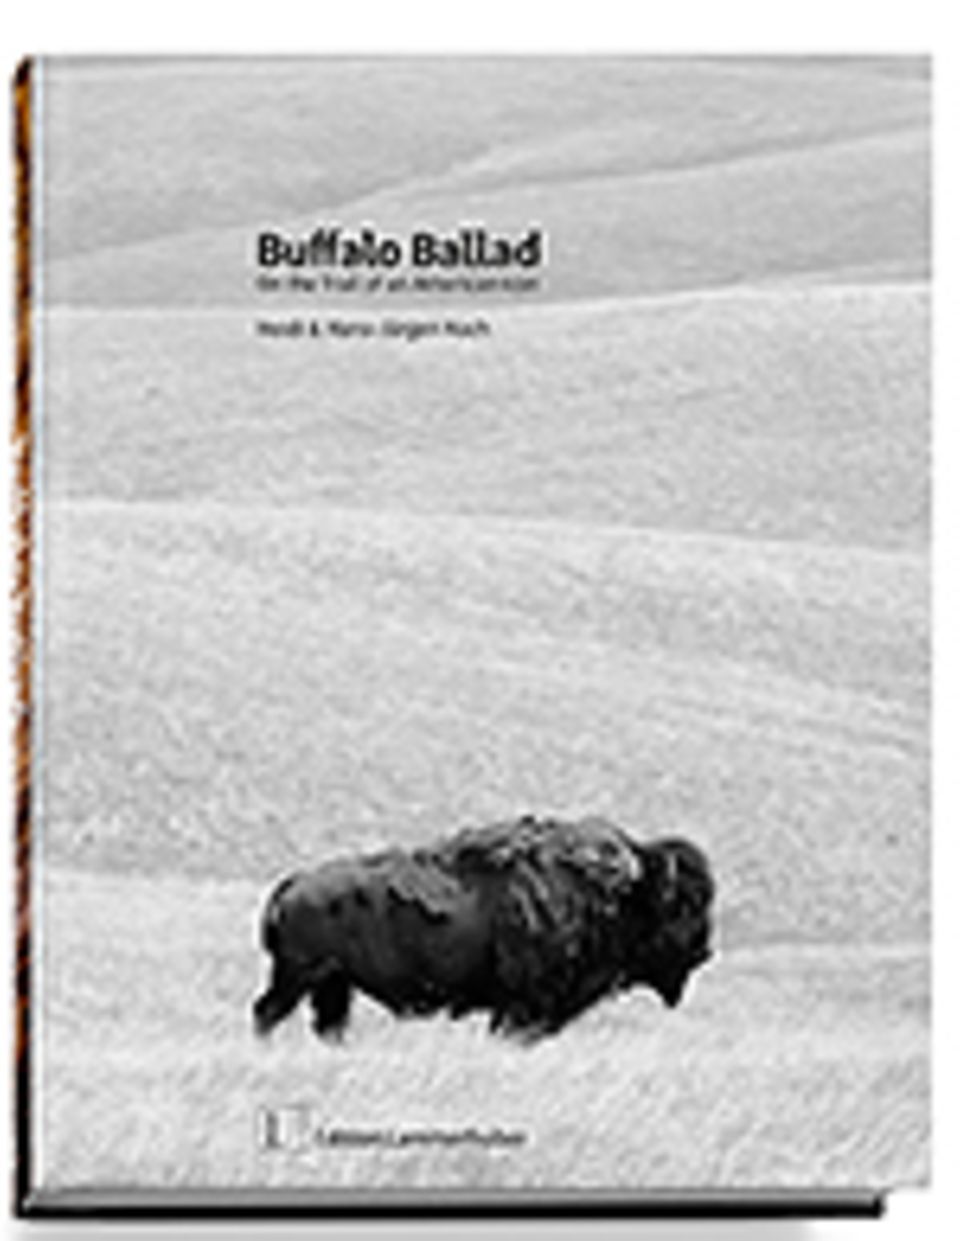 Amerikanische Bisons: Heidi & Hans-Jürgen Koch Buffalo Ballad Edition Lammerhuber 2014 224 S., 110 Fotos, 99 Euro